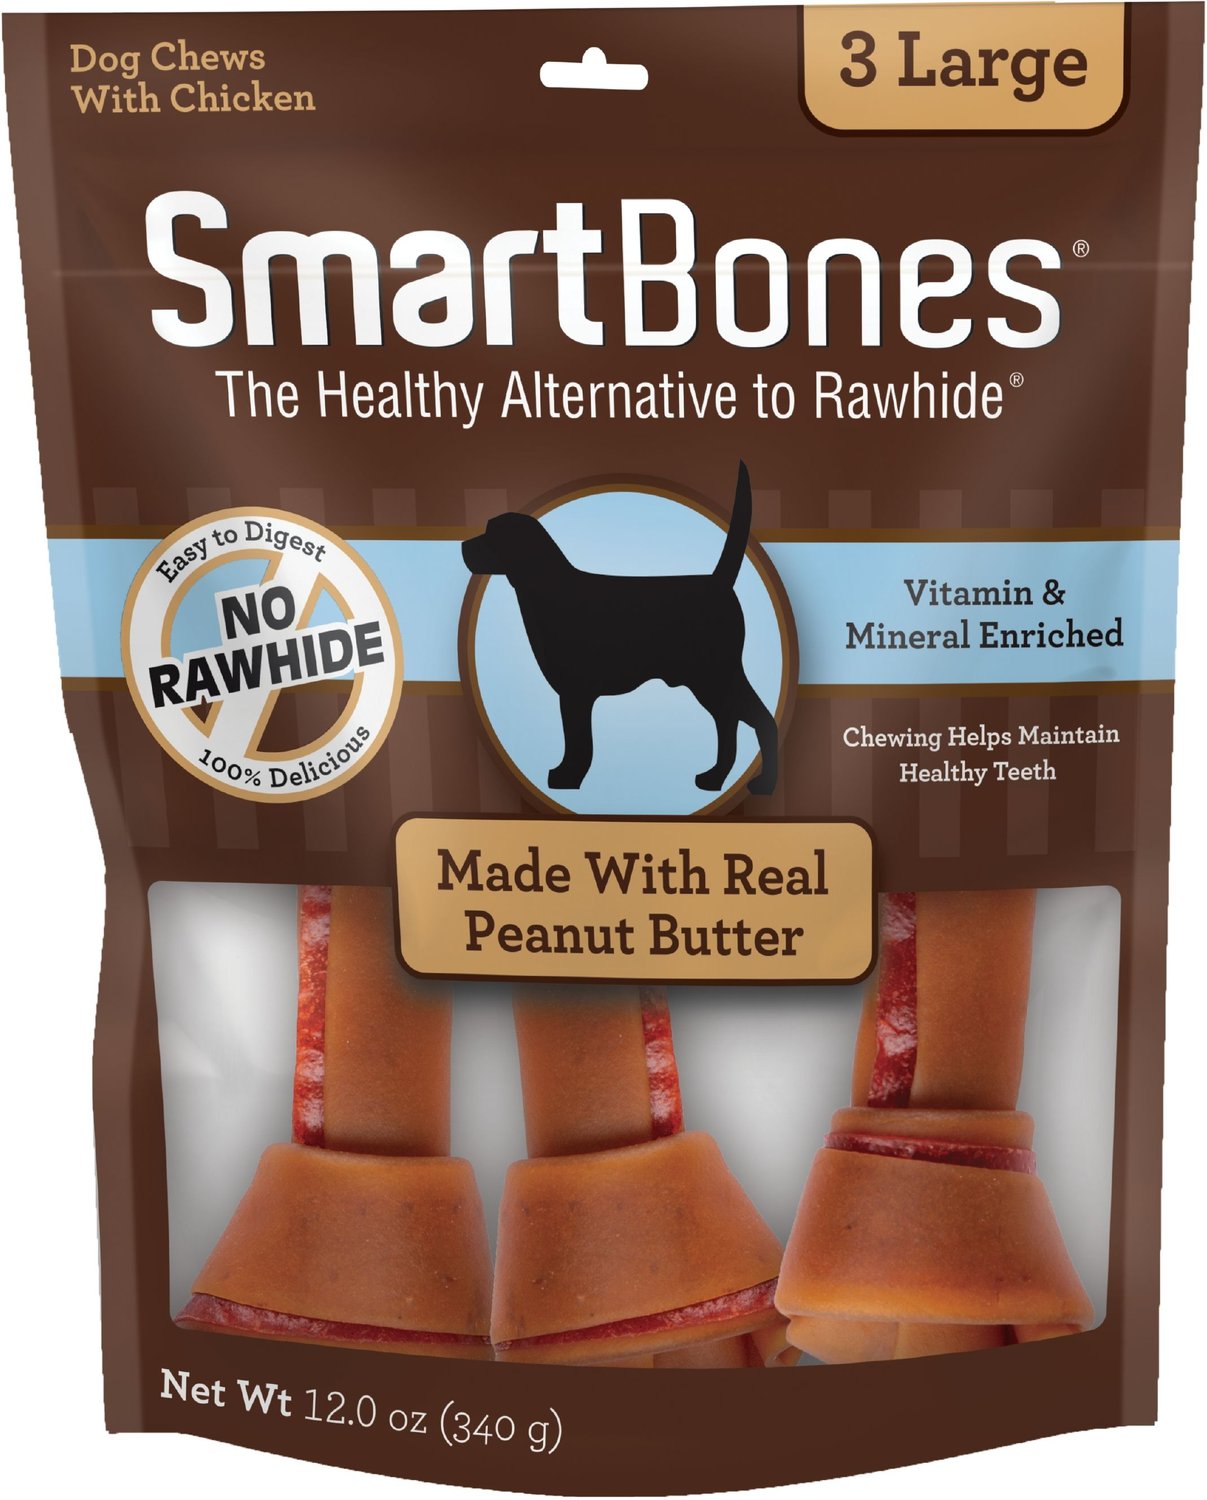 healthy dog bones to chew on